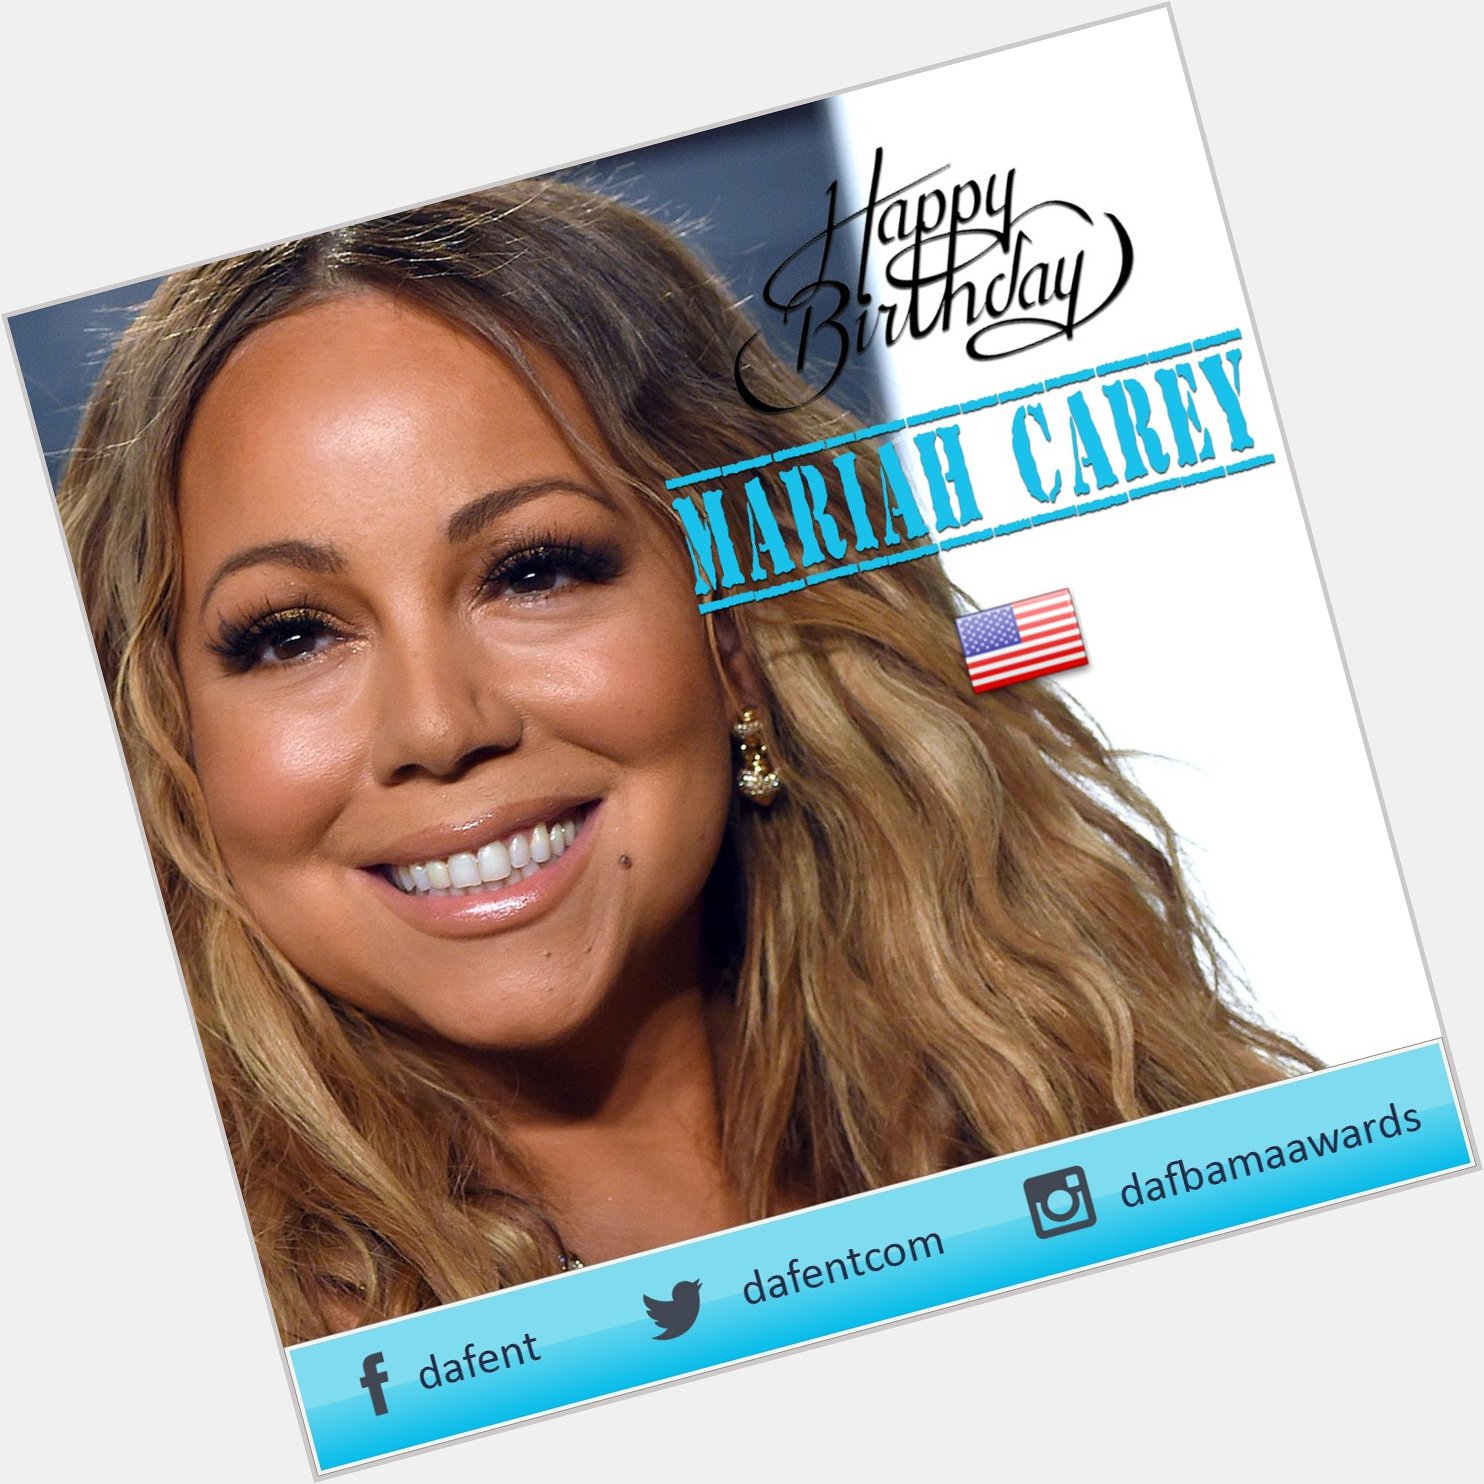 Happy birthday, Mariah Carey. 